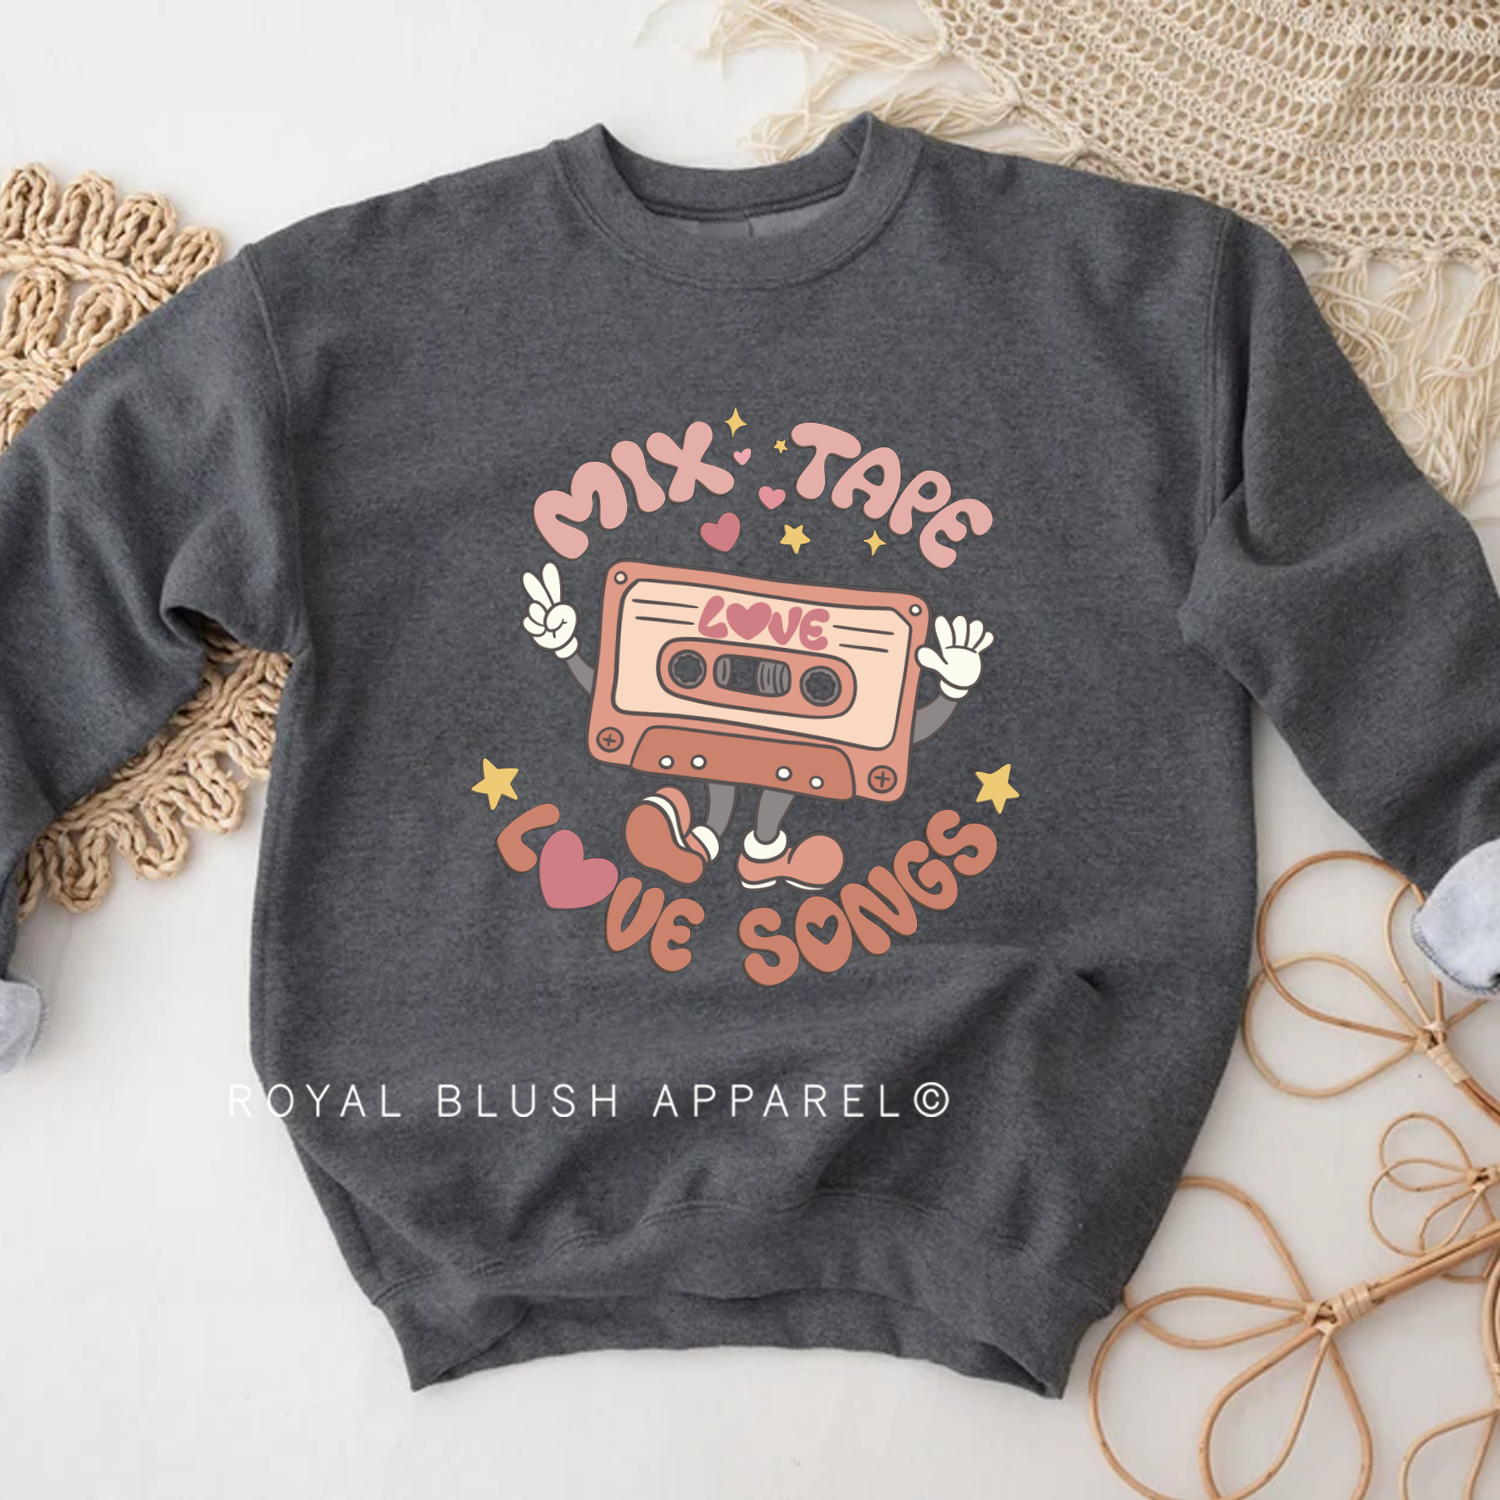 Mix Tape Love Songs Sweatshirt